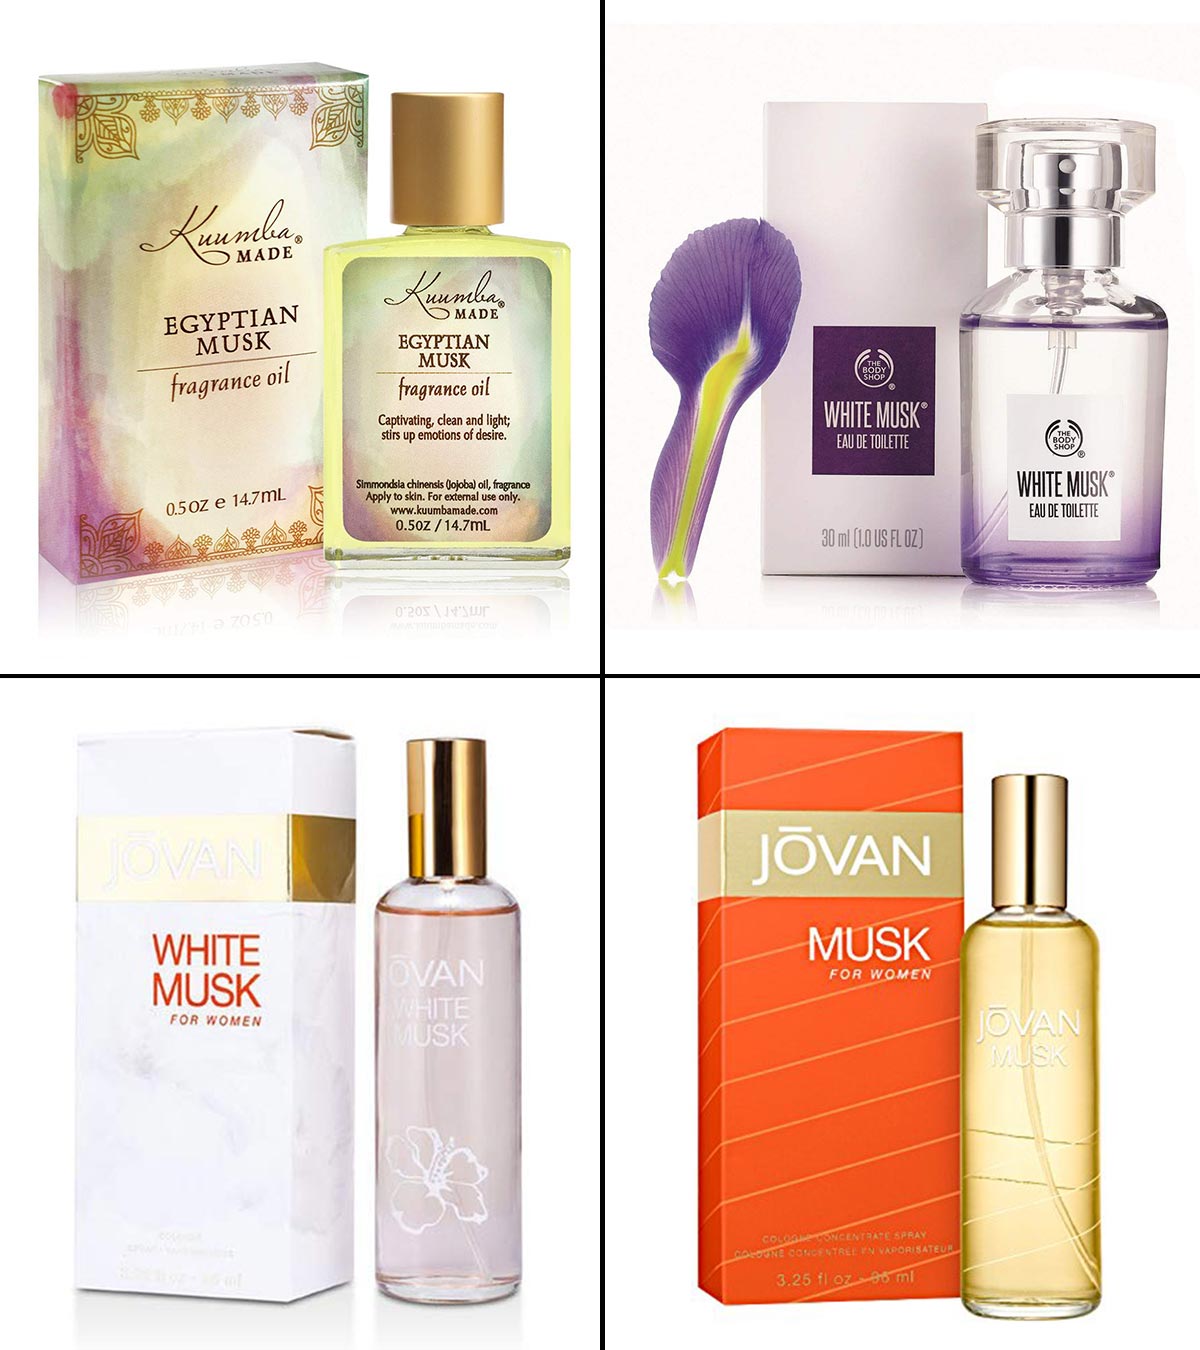 Lattafa Pure Musk Review, Affordable Perfumes